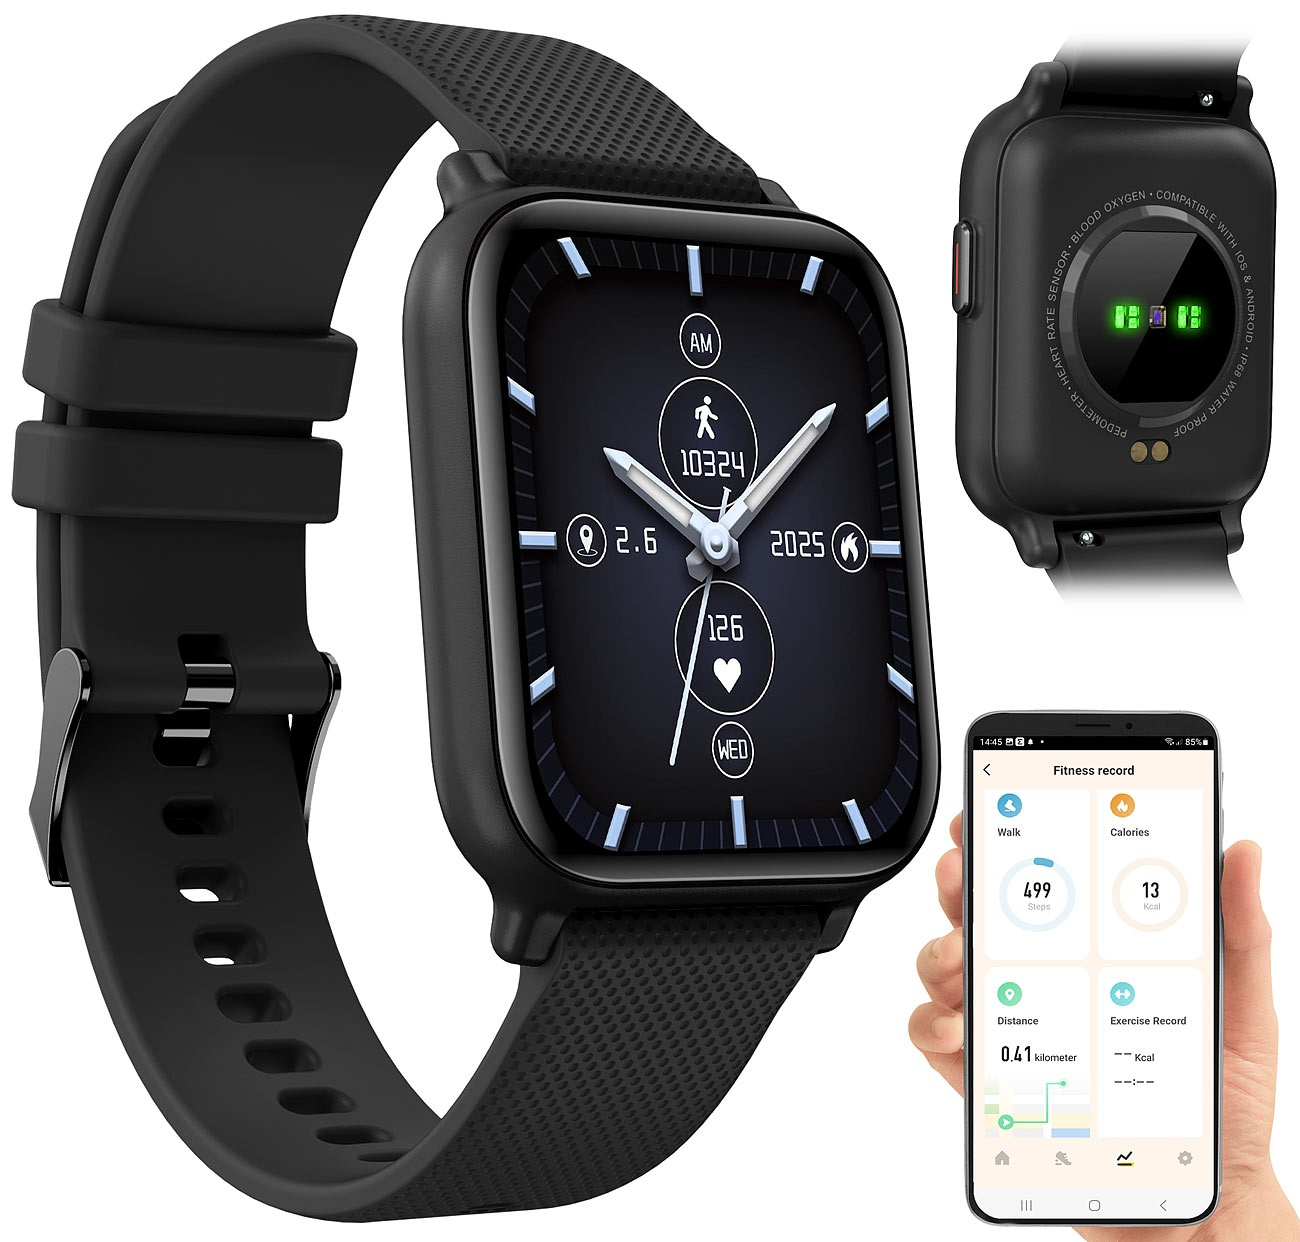 ELESION-kompatible Fitness-Smartwatch, Szenen-Steuerung,Bluetooth,IP68